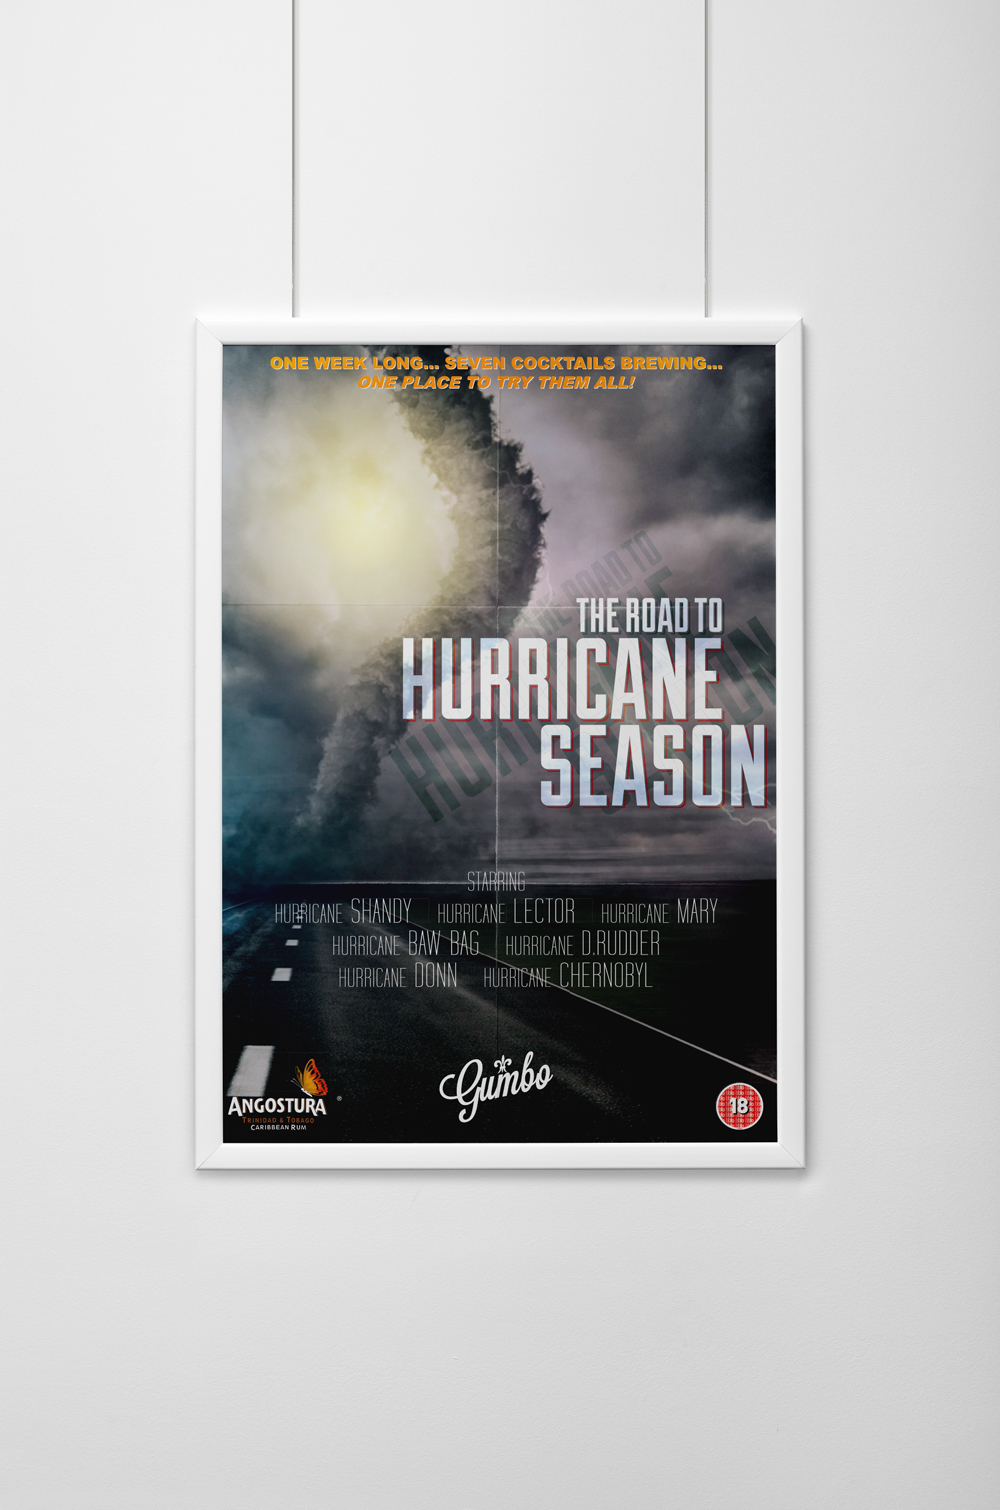 gumbo hurricane season Drinks Menu Promotion poster flyer glasgow scotland